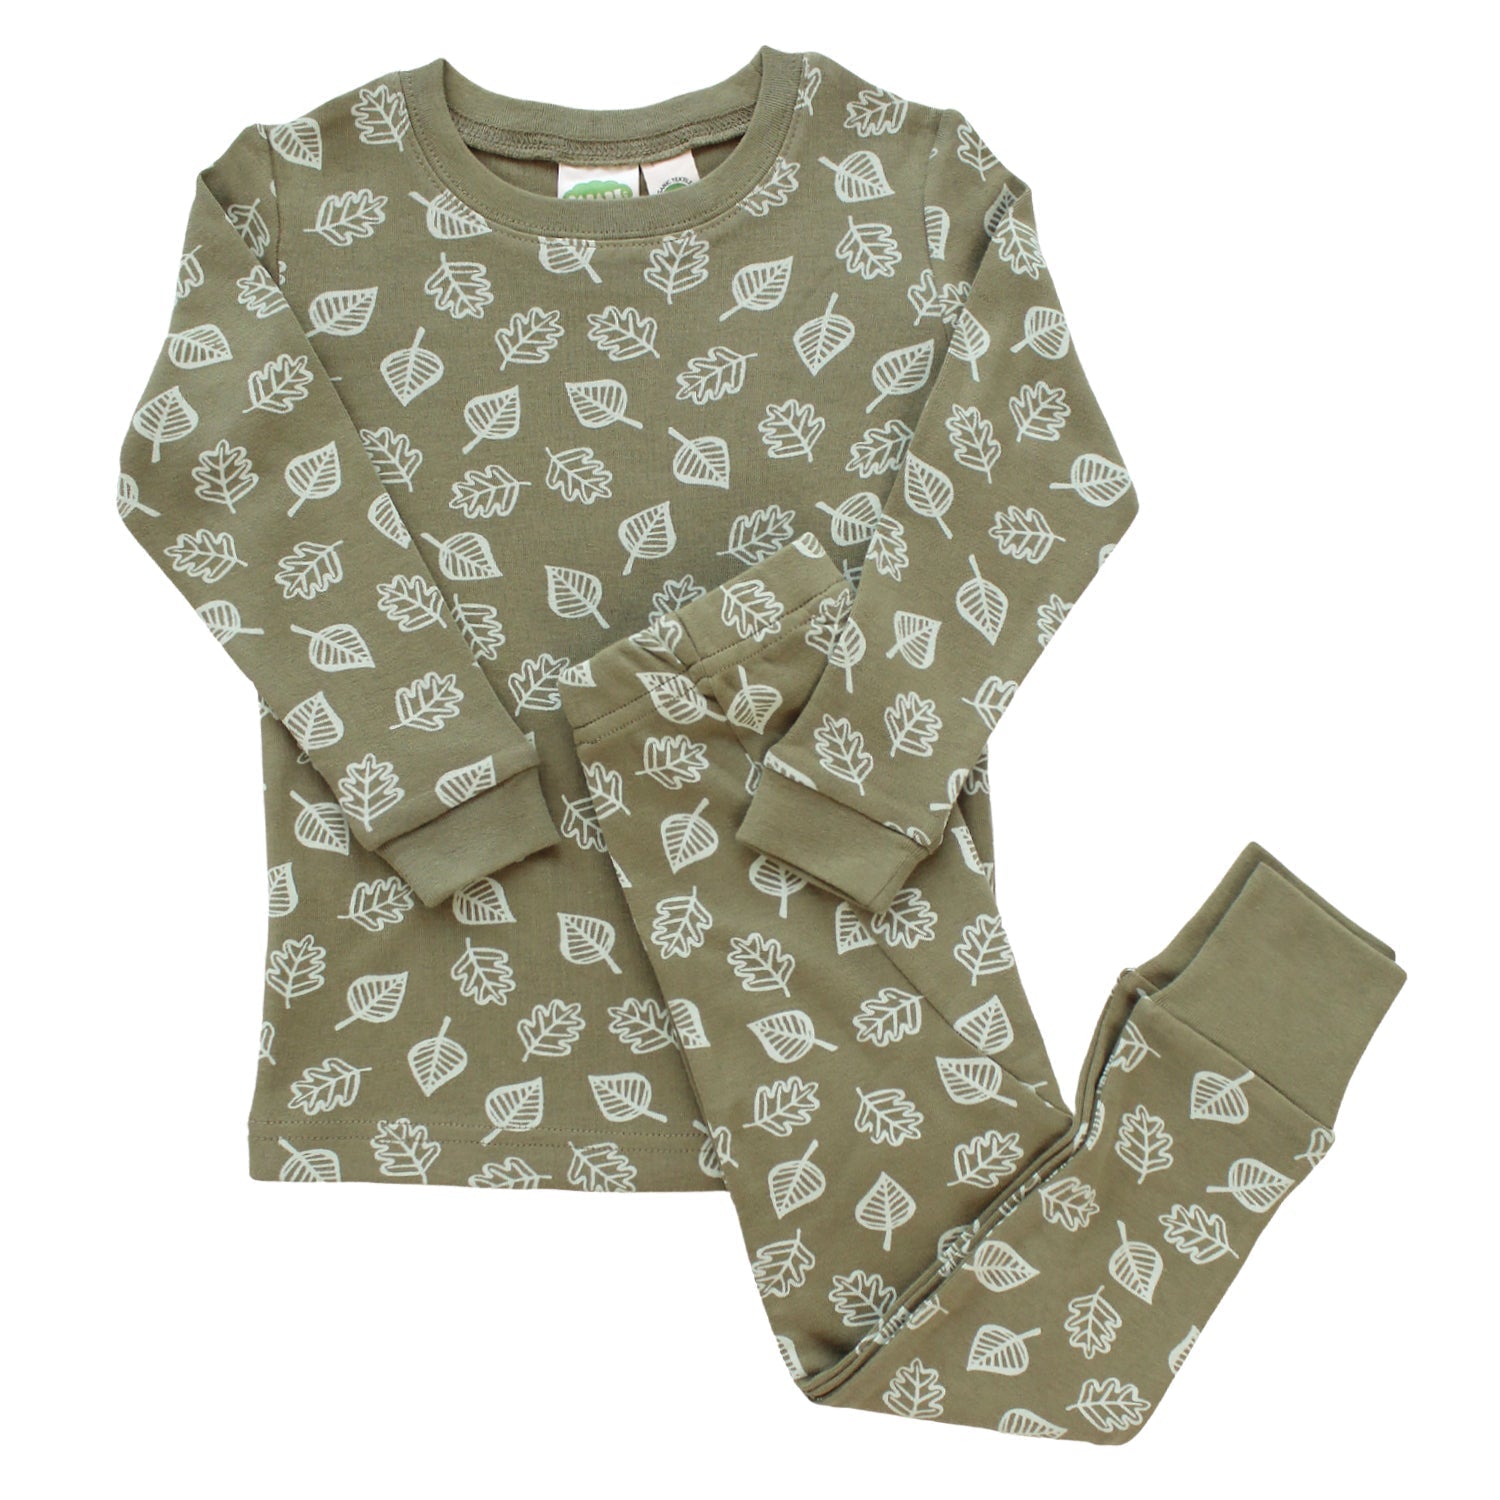 Matchy-Matchy Family Pajamas Snug Fit Baby Sleeper - Sale